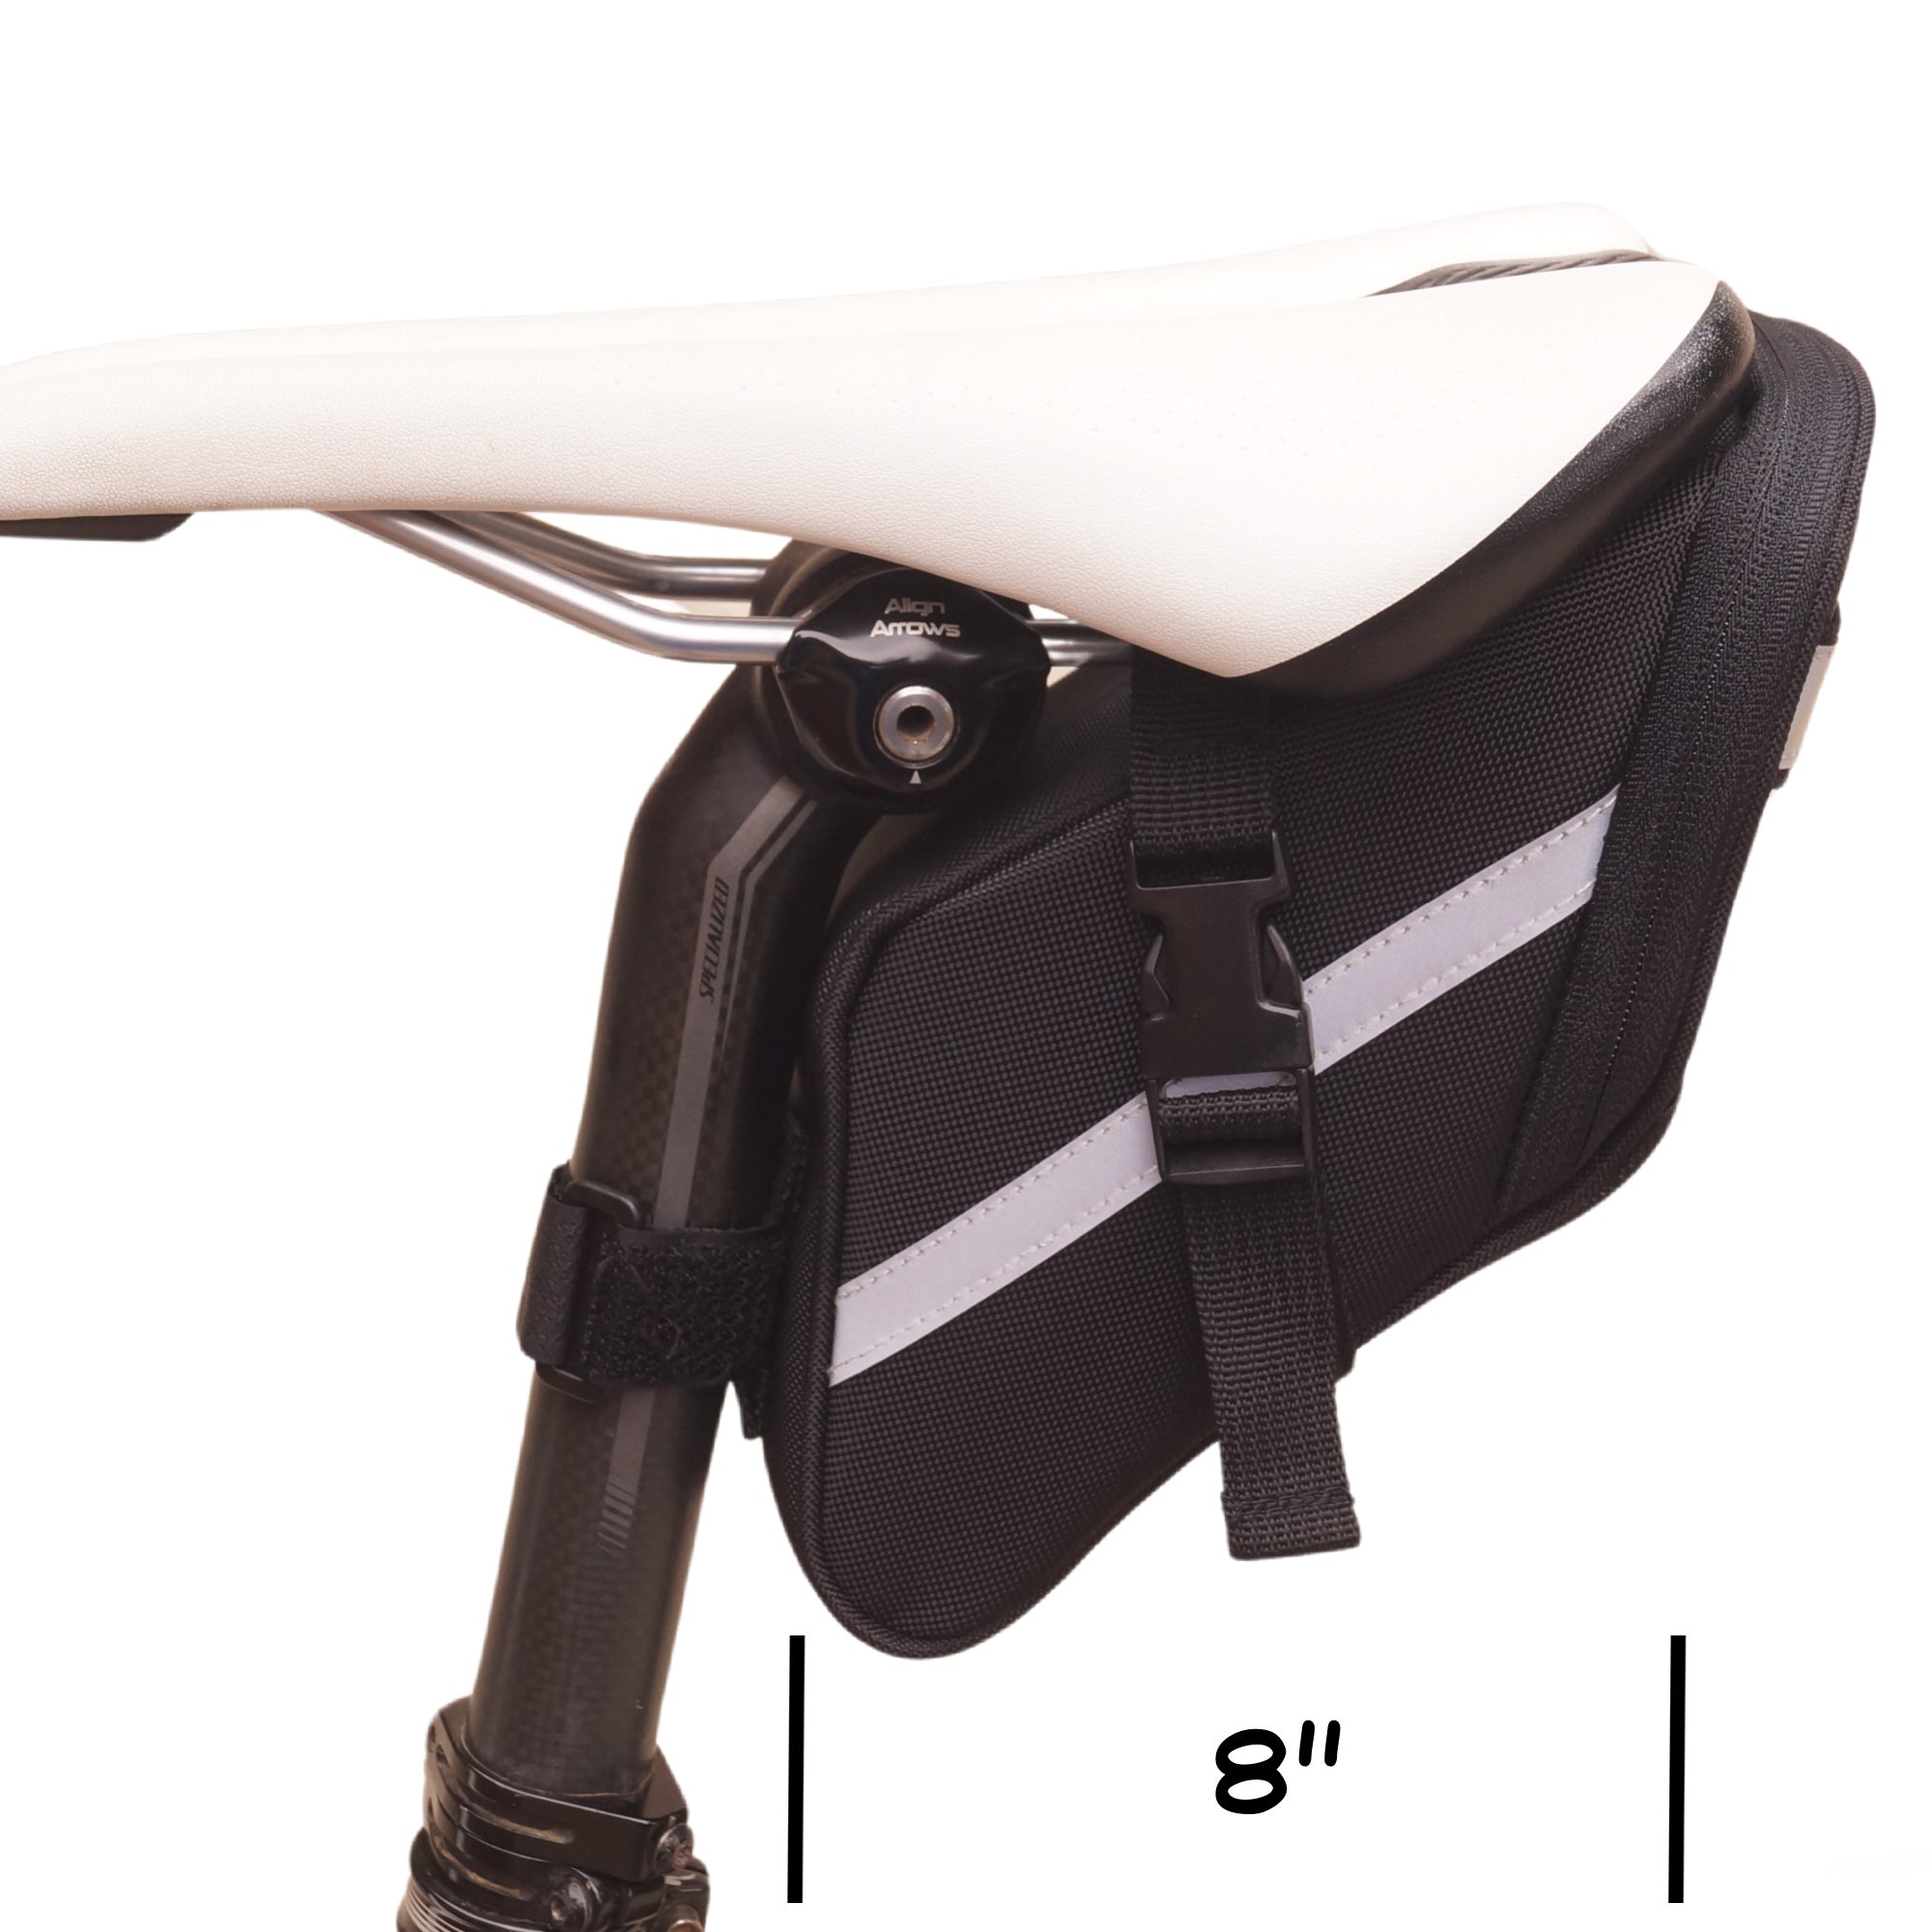 Ebike Phone Holder – Beetle Phone Bag for Large Diameter Bike Frames